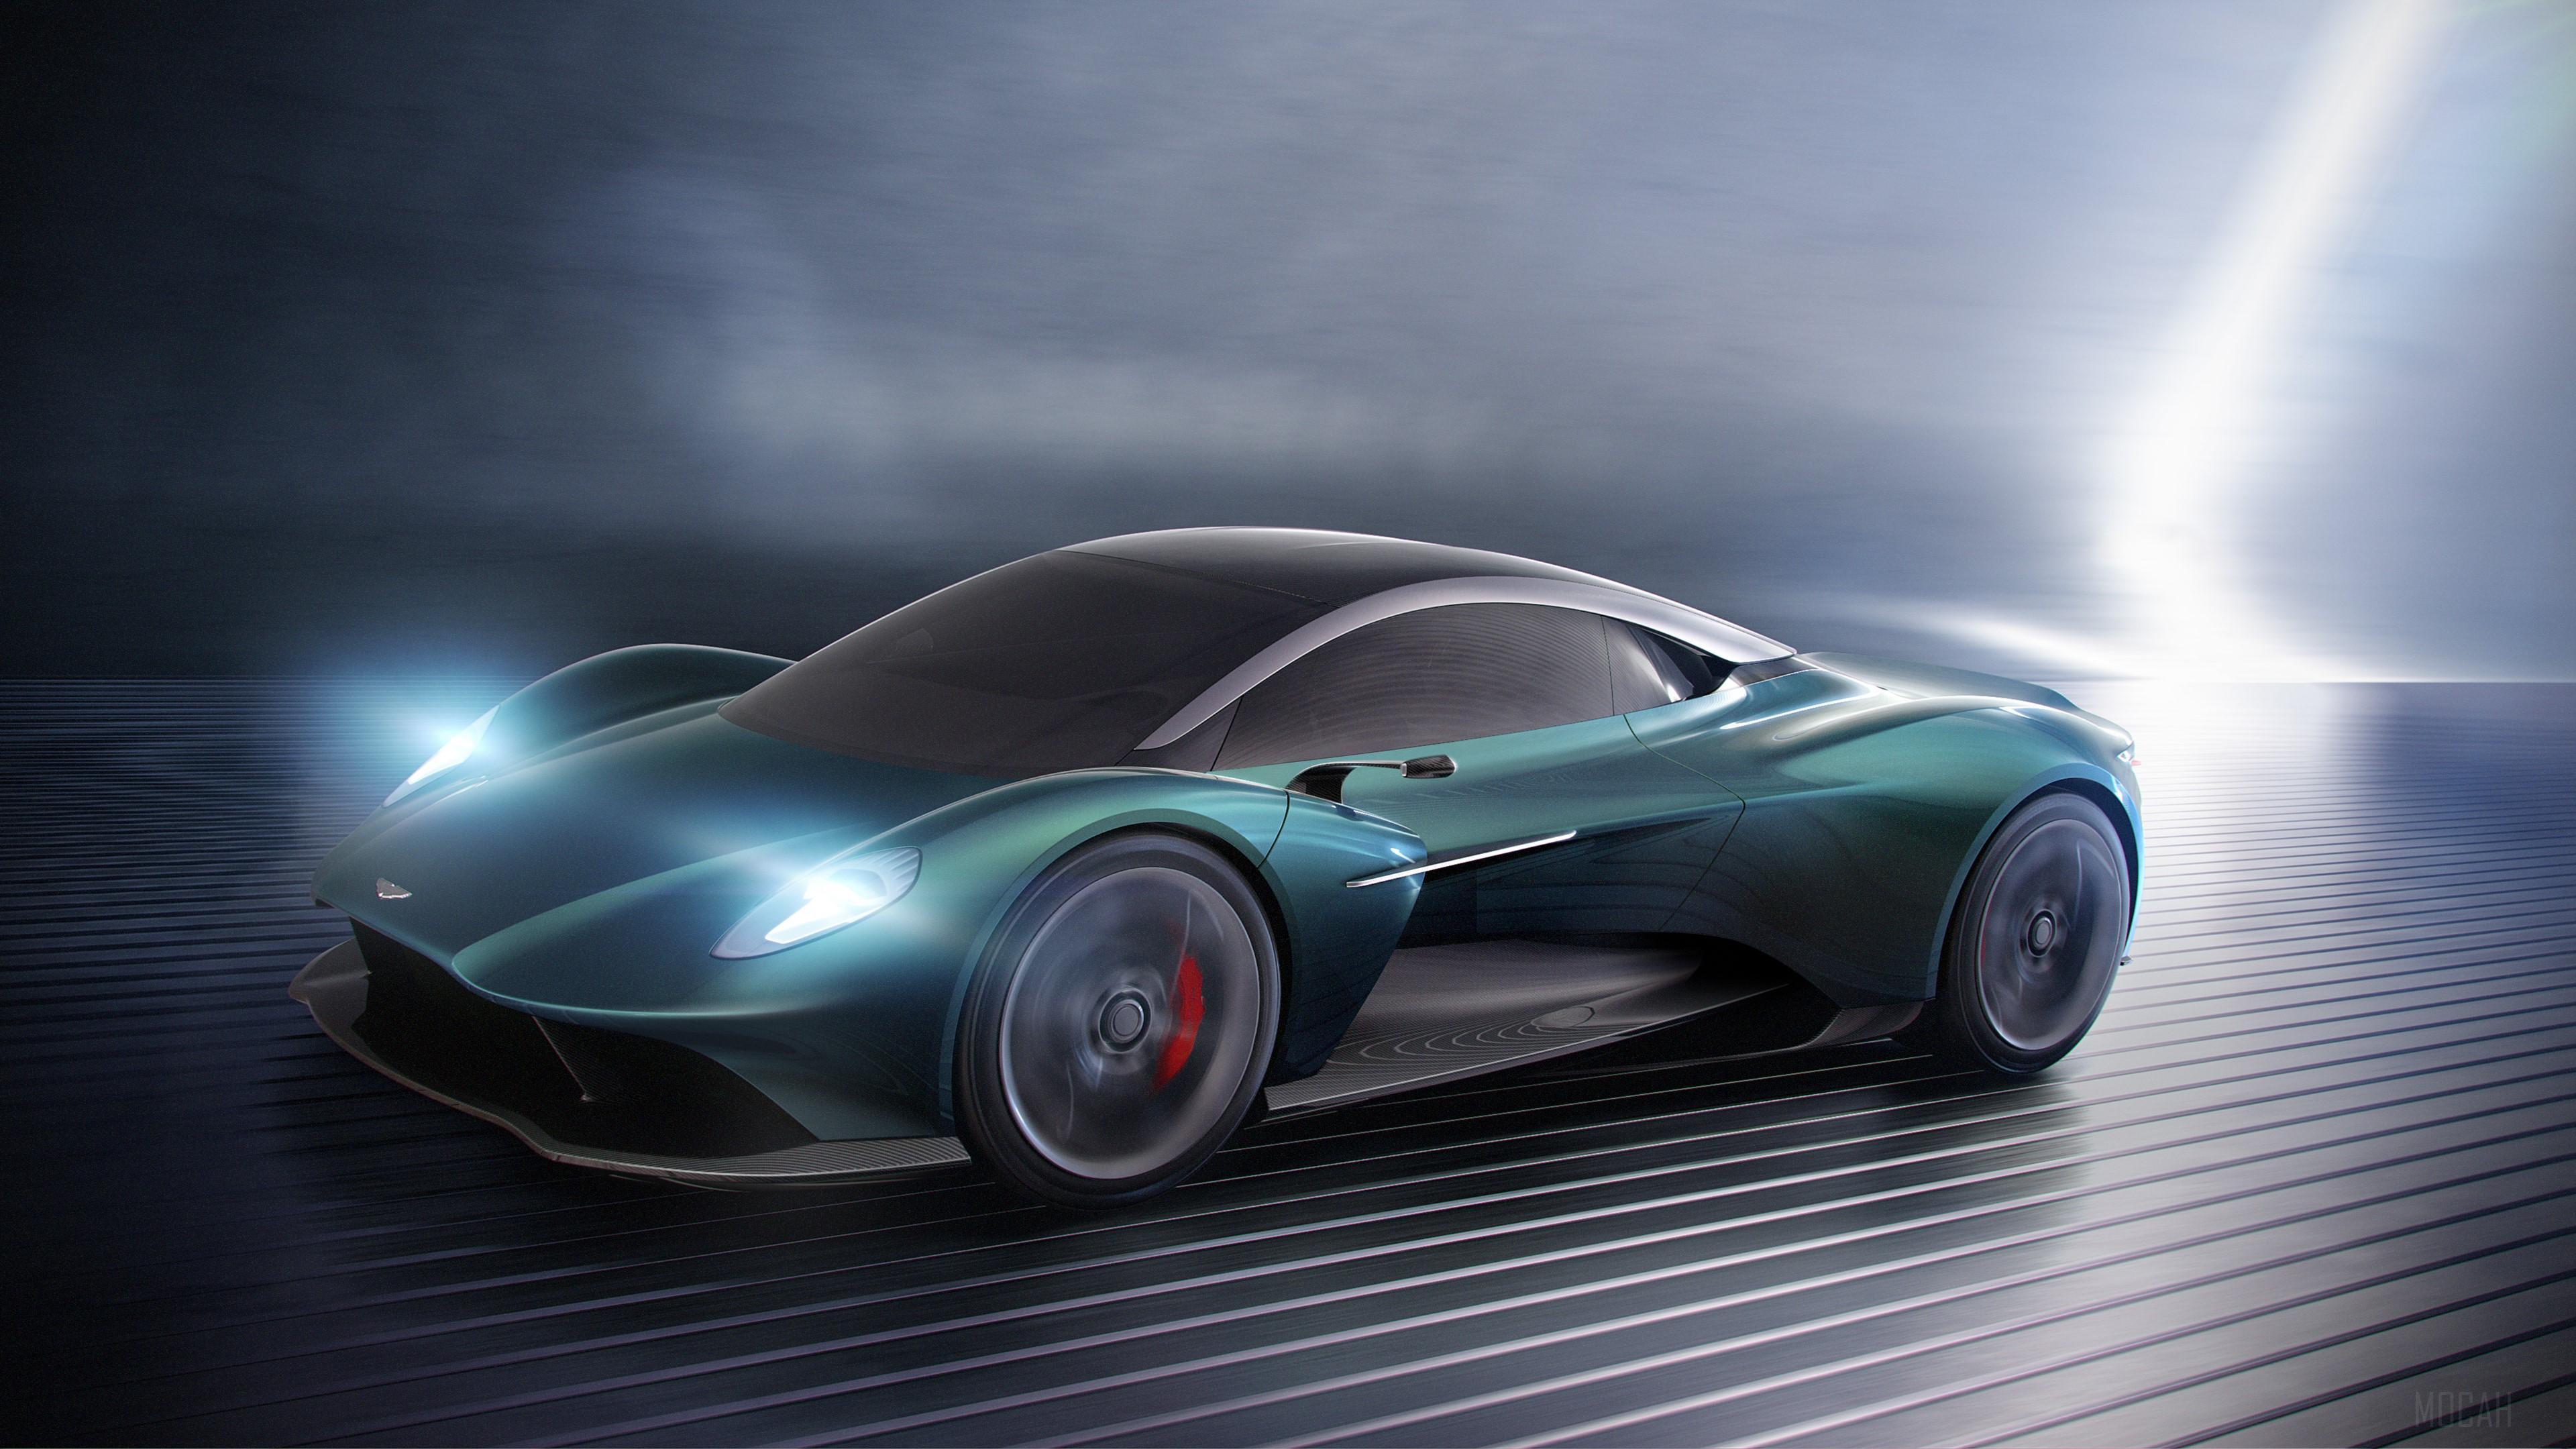 HD wallpaper, 2019 Aston Martin Vanquish Vision Concept 4K